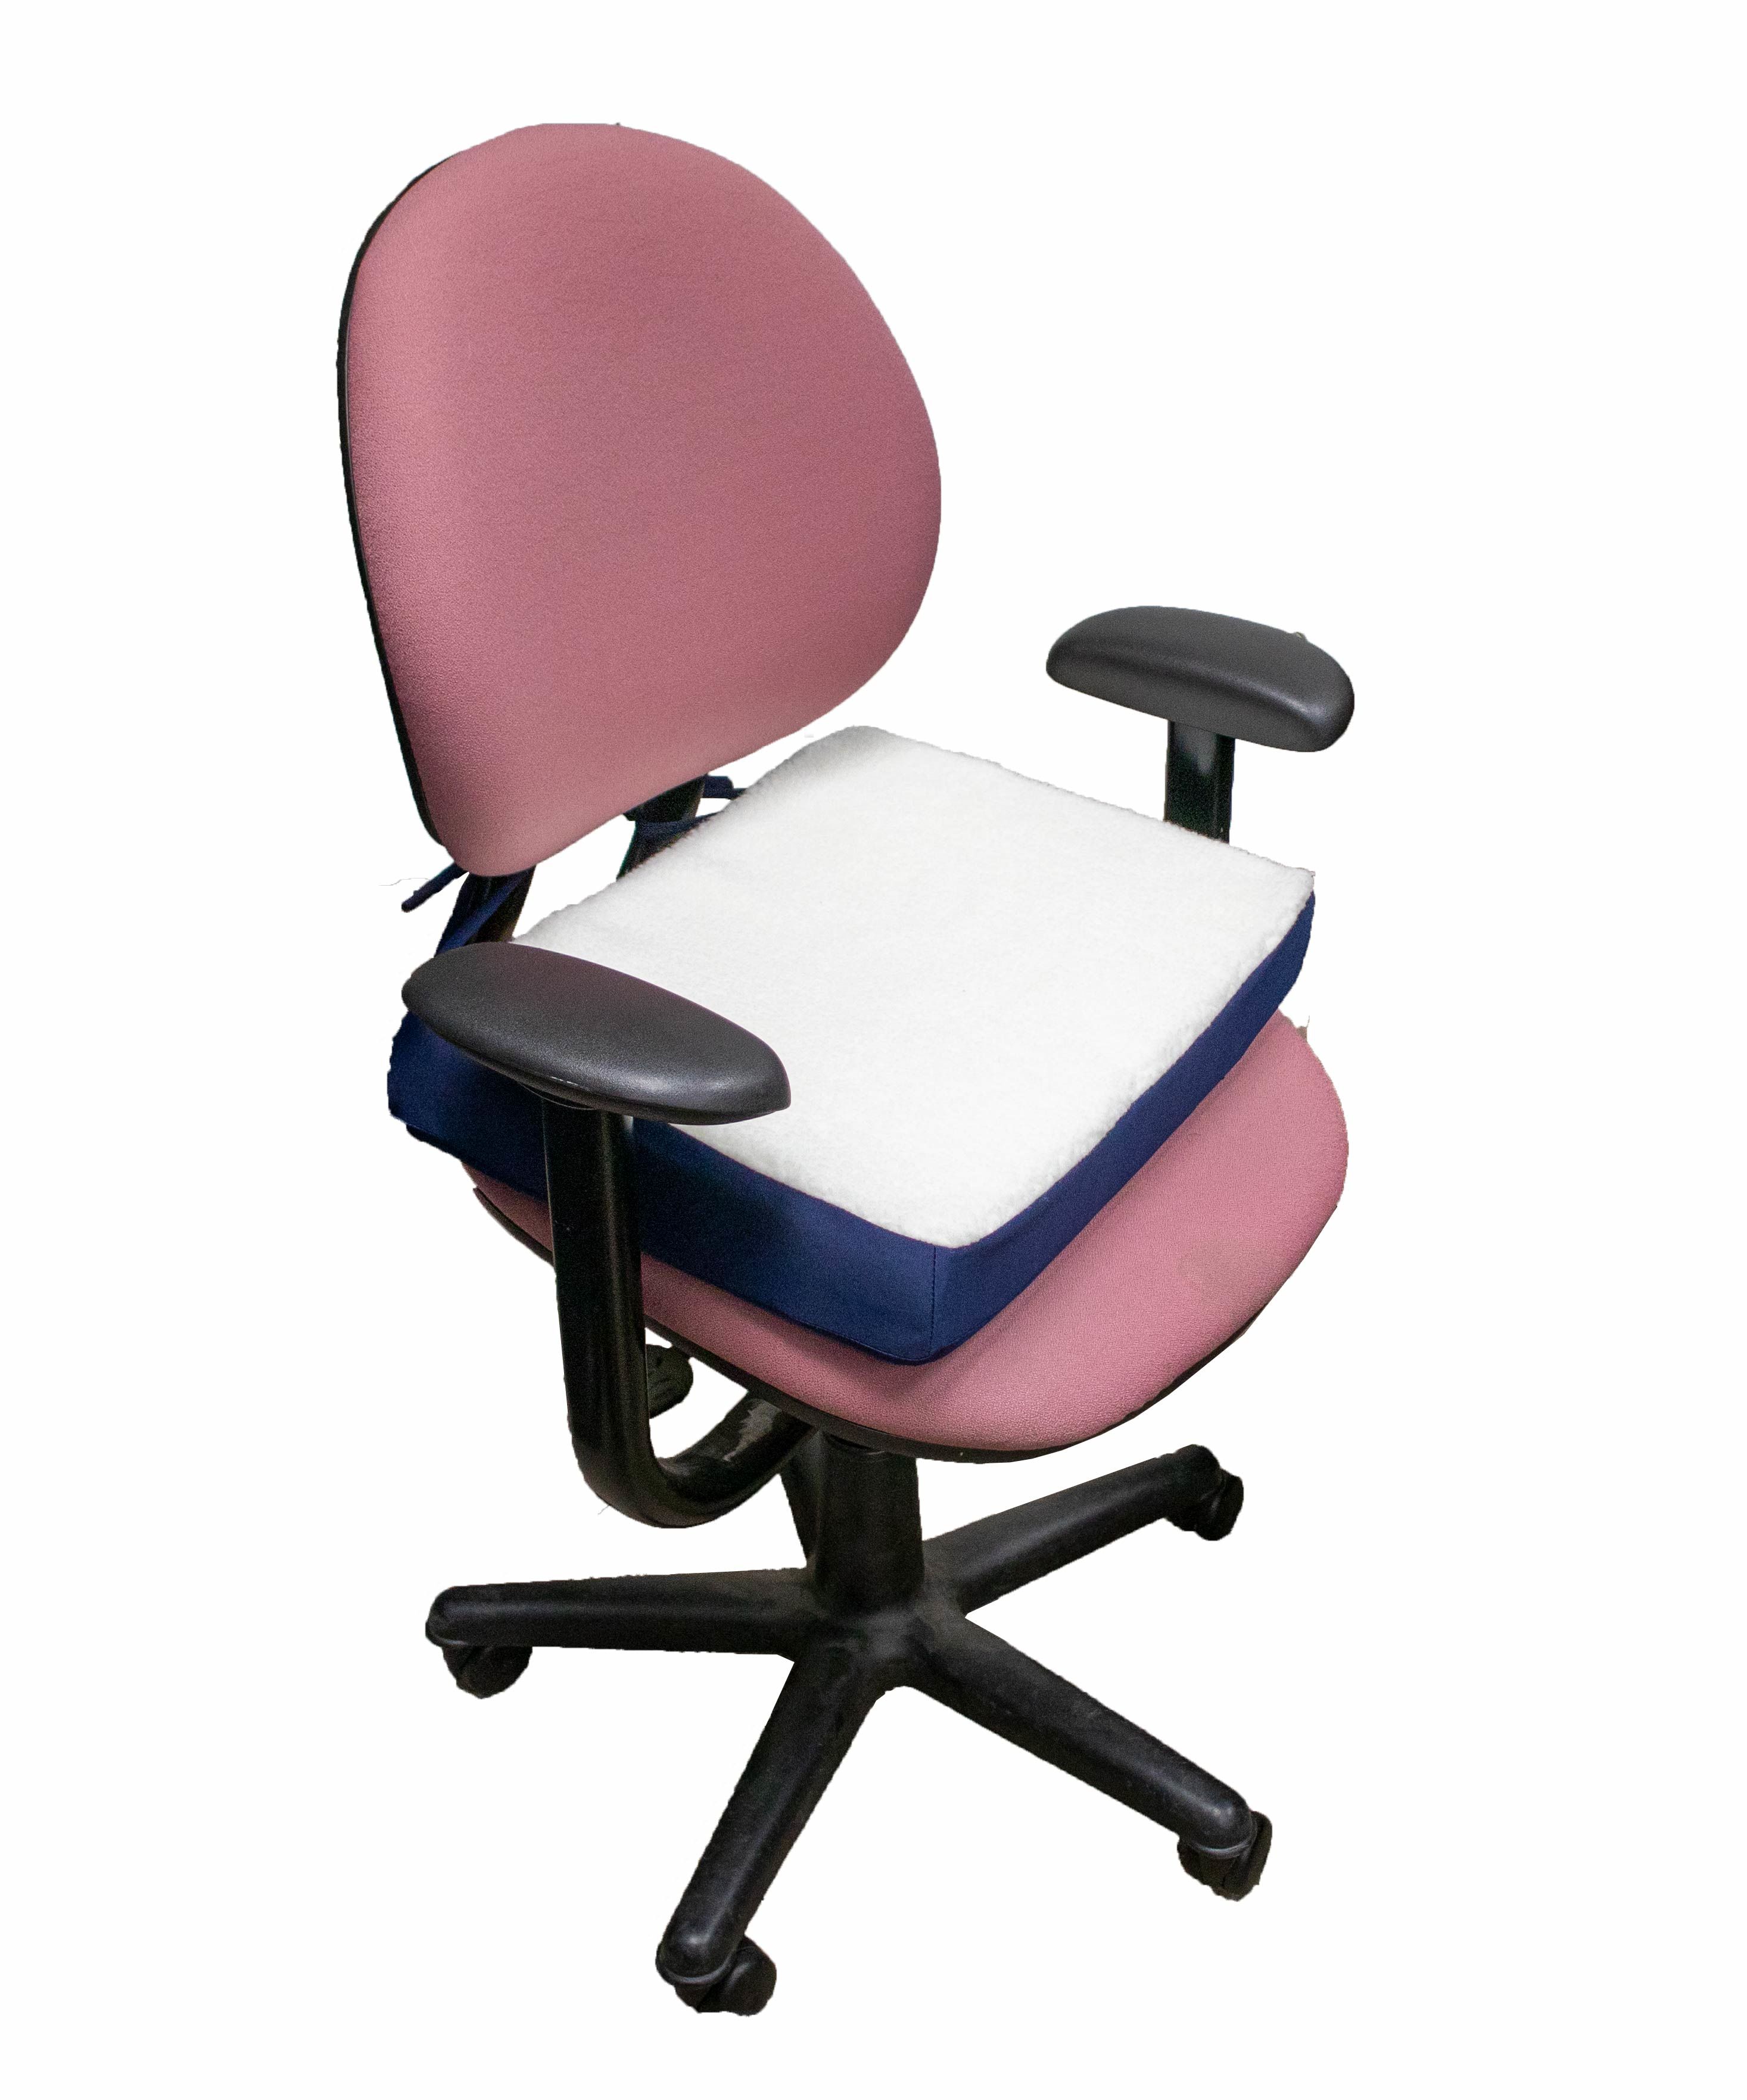 Premium GEL Memory Foam Seat Cushion Pad for Chair Car